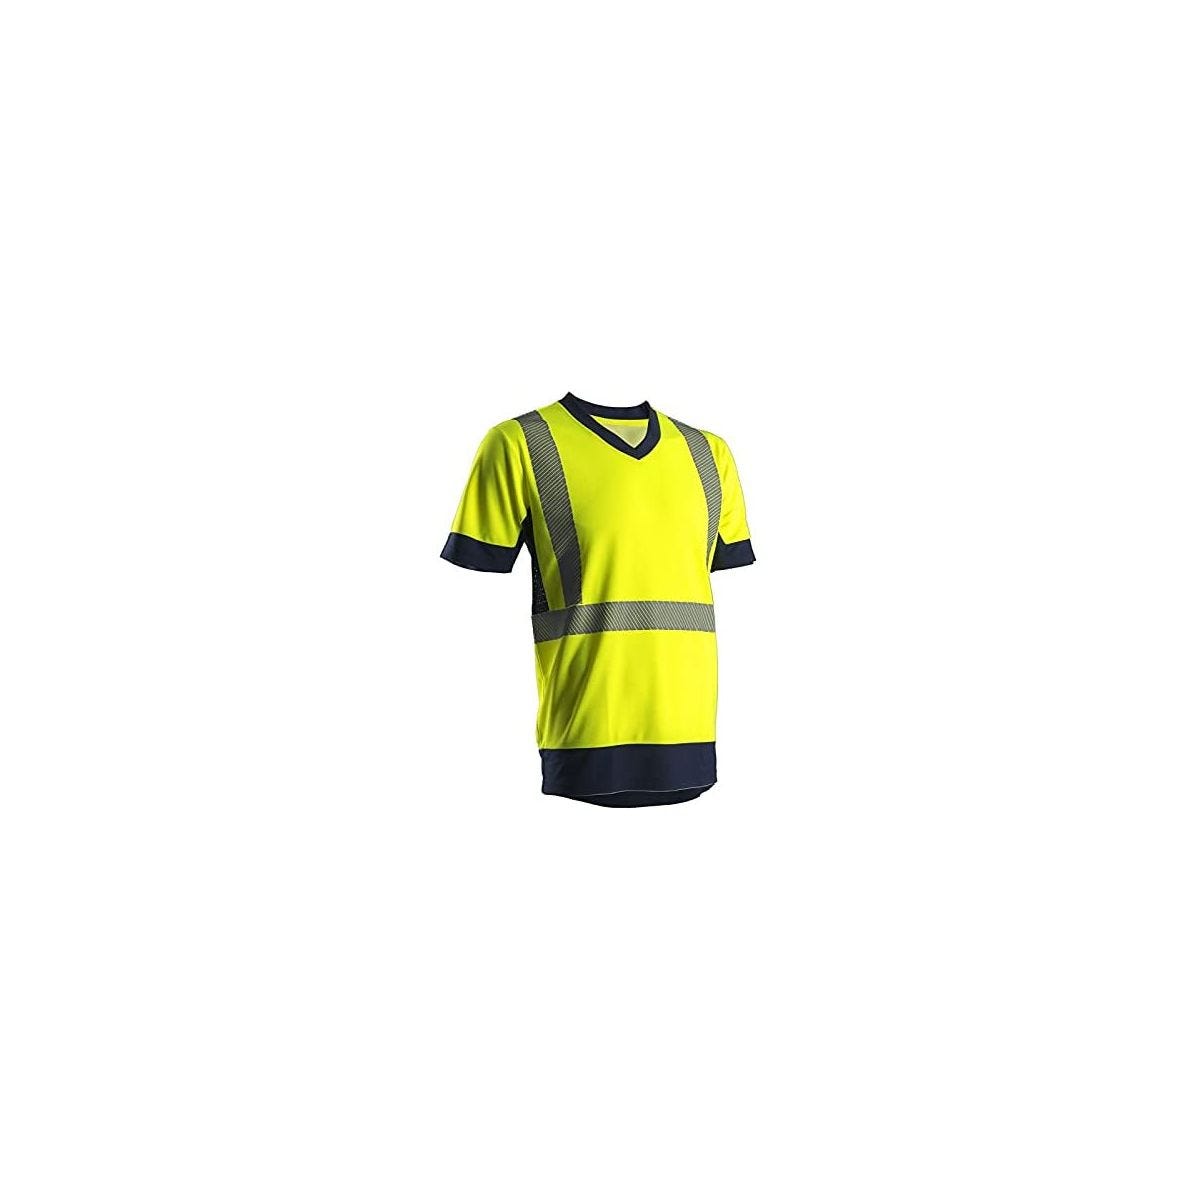 KYRIA T-shirt MC, jaune HV/marine, 100% polyester, 140g/m² - COVERGUARD - Taille 3XL 0